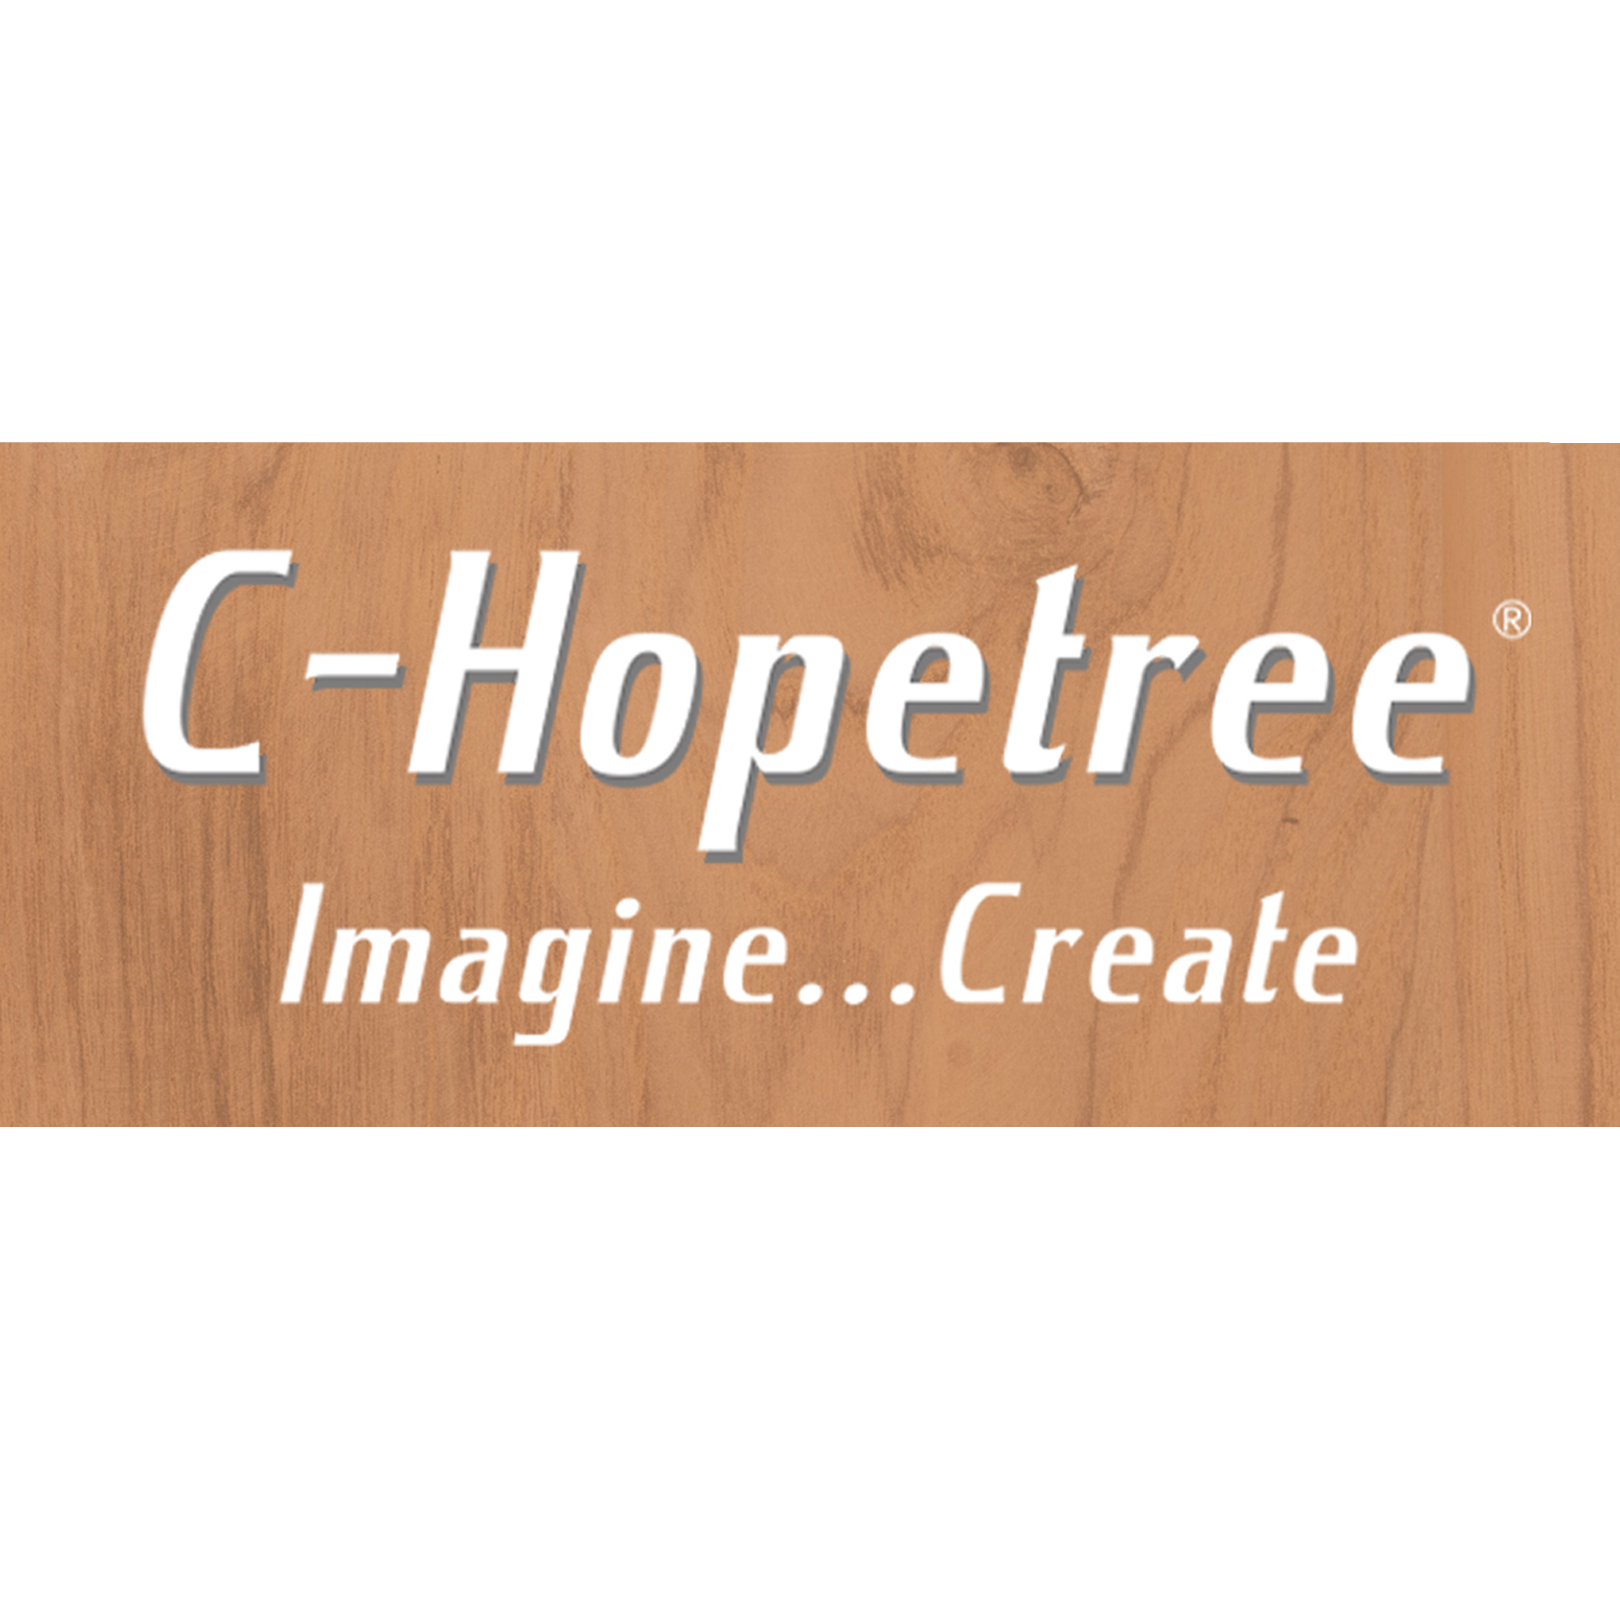 C-Hopetree